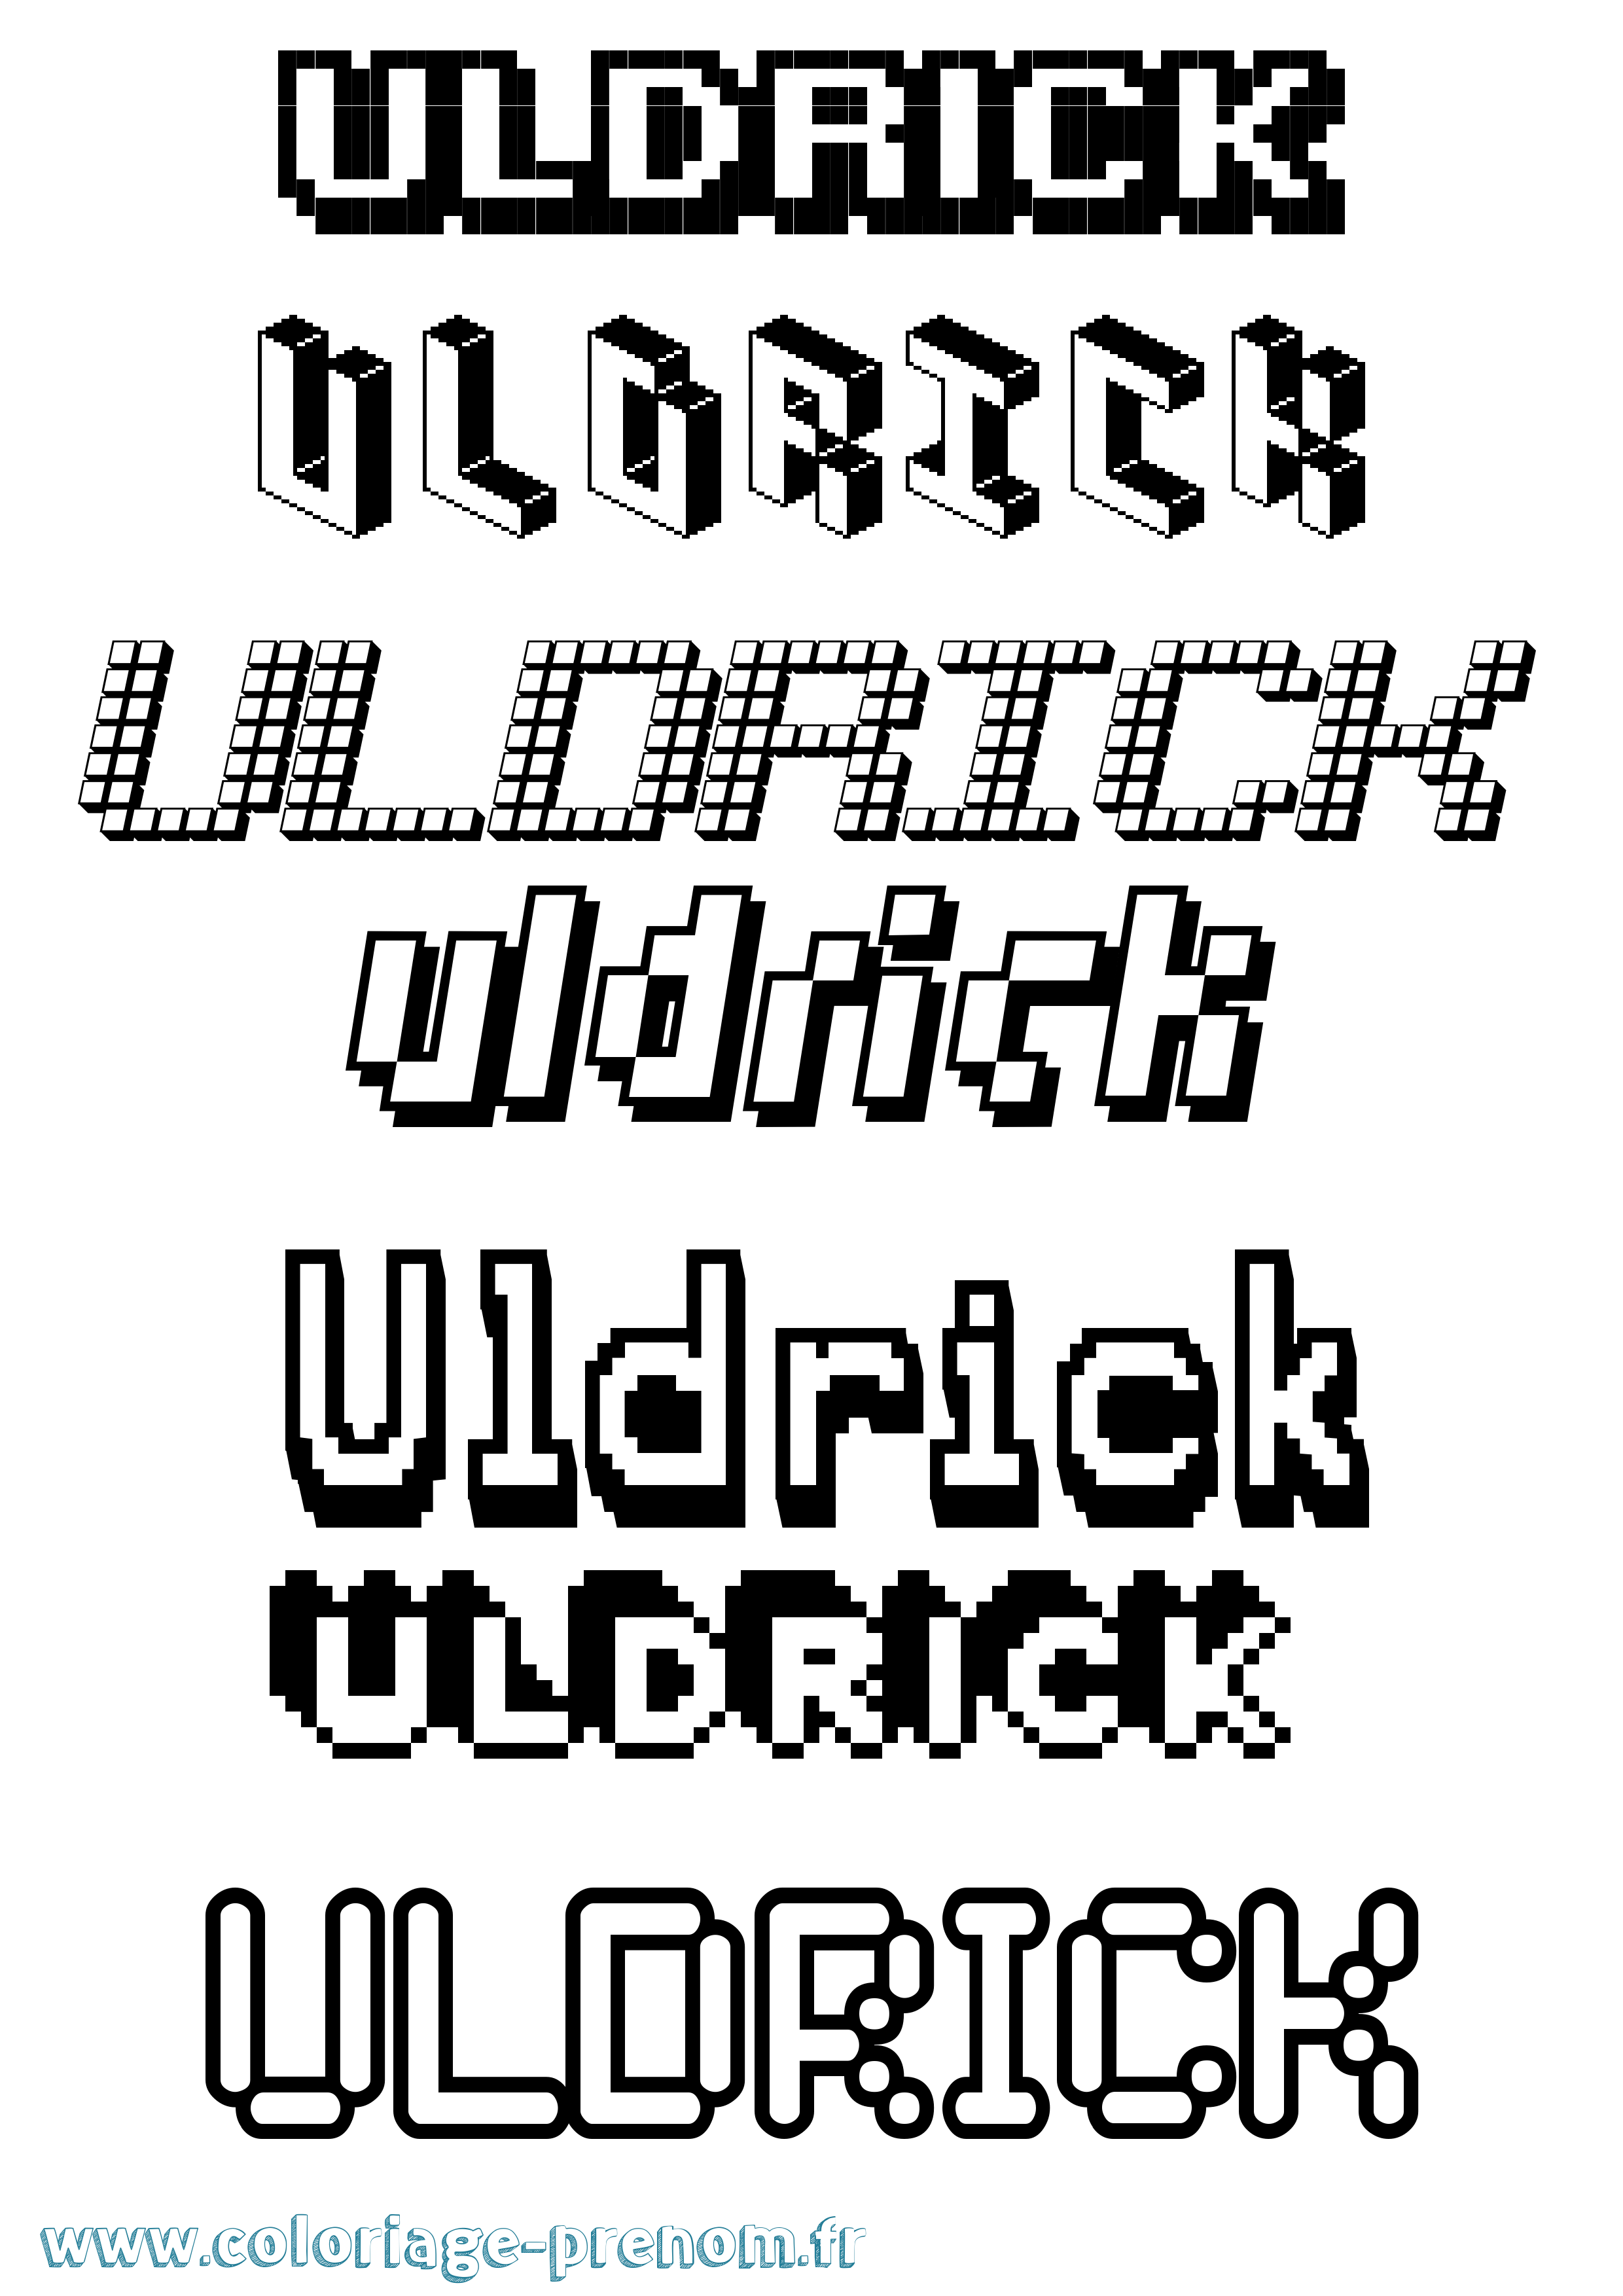 Coloriage prénom Uldrick Pixel